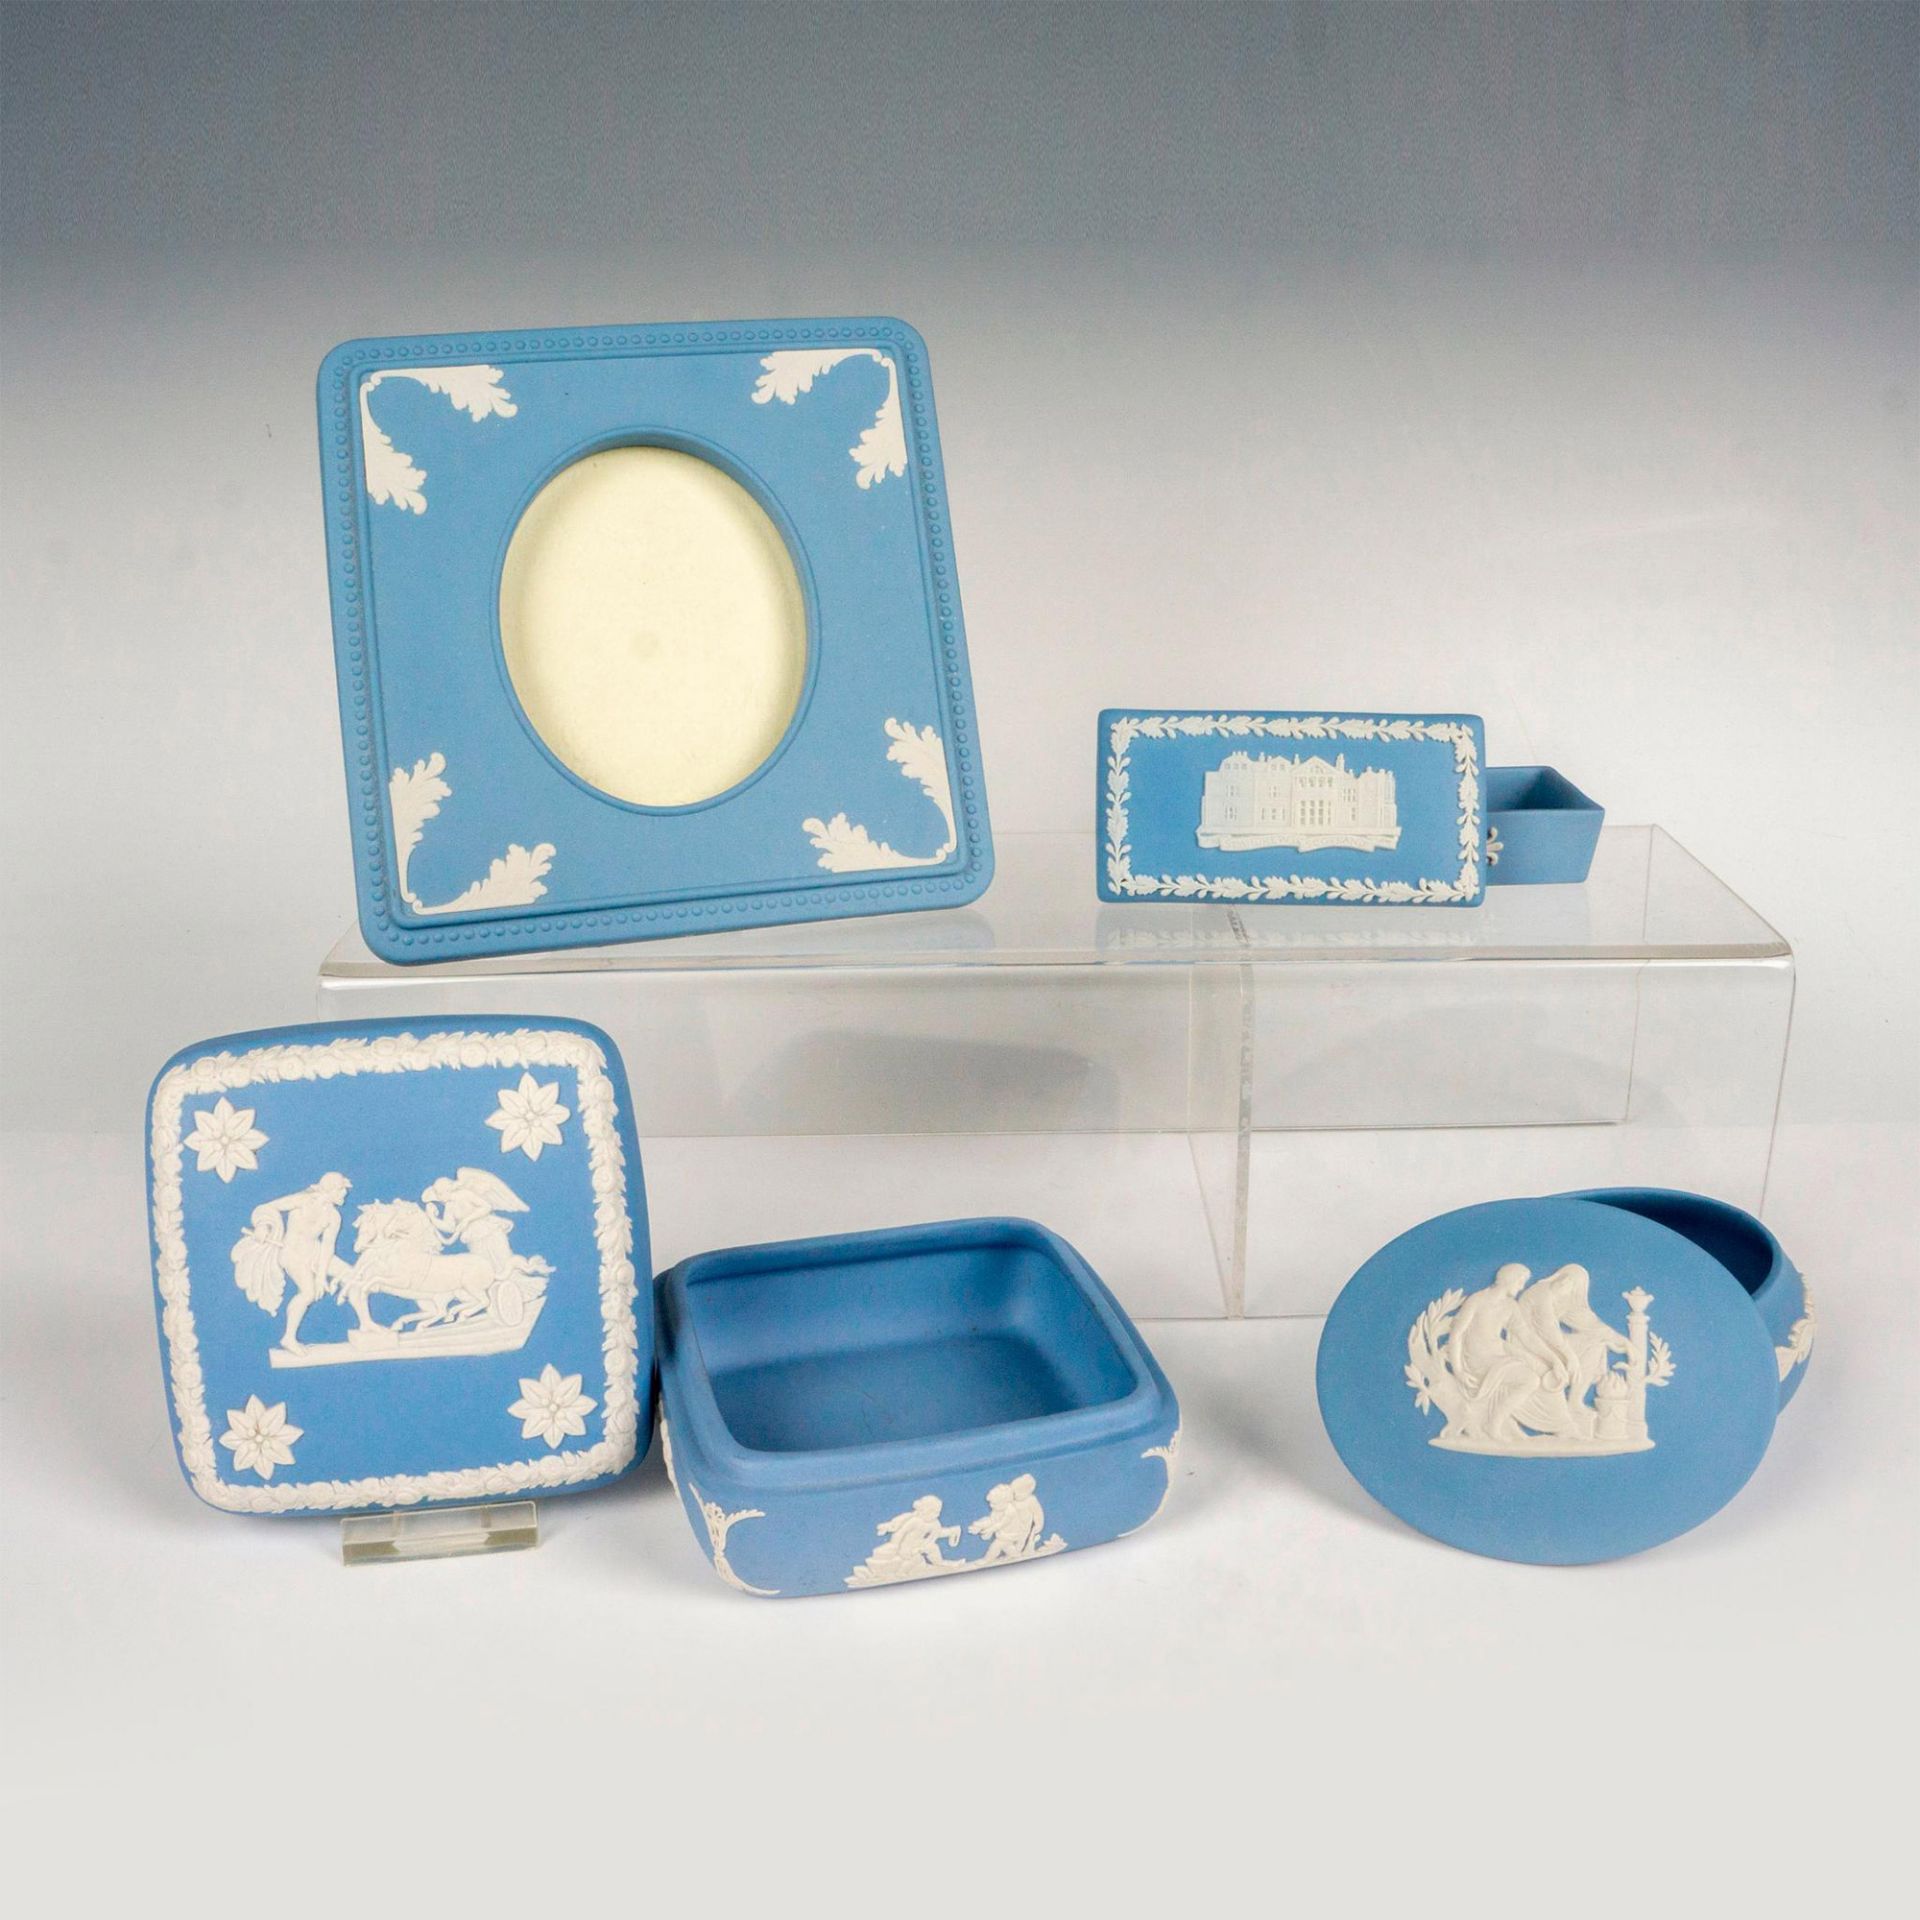 4pc Wedgwood Blue & White Jasperware Dresser Set - Image 2 of 4